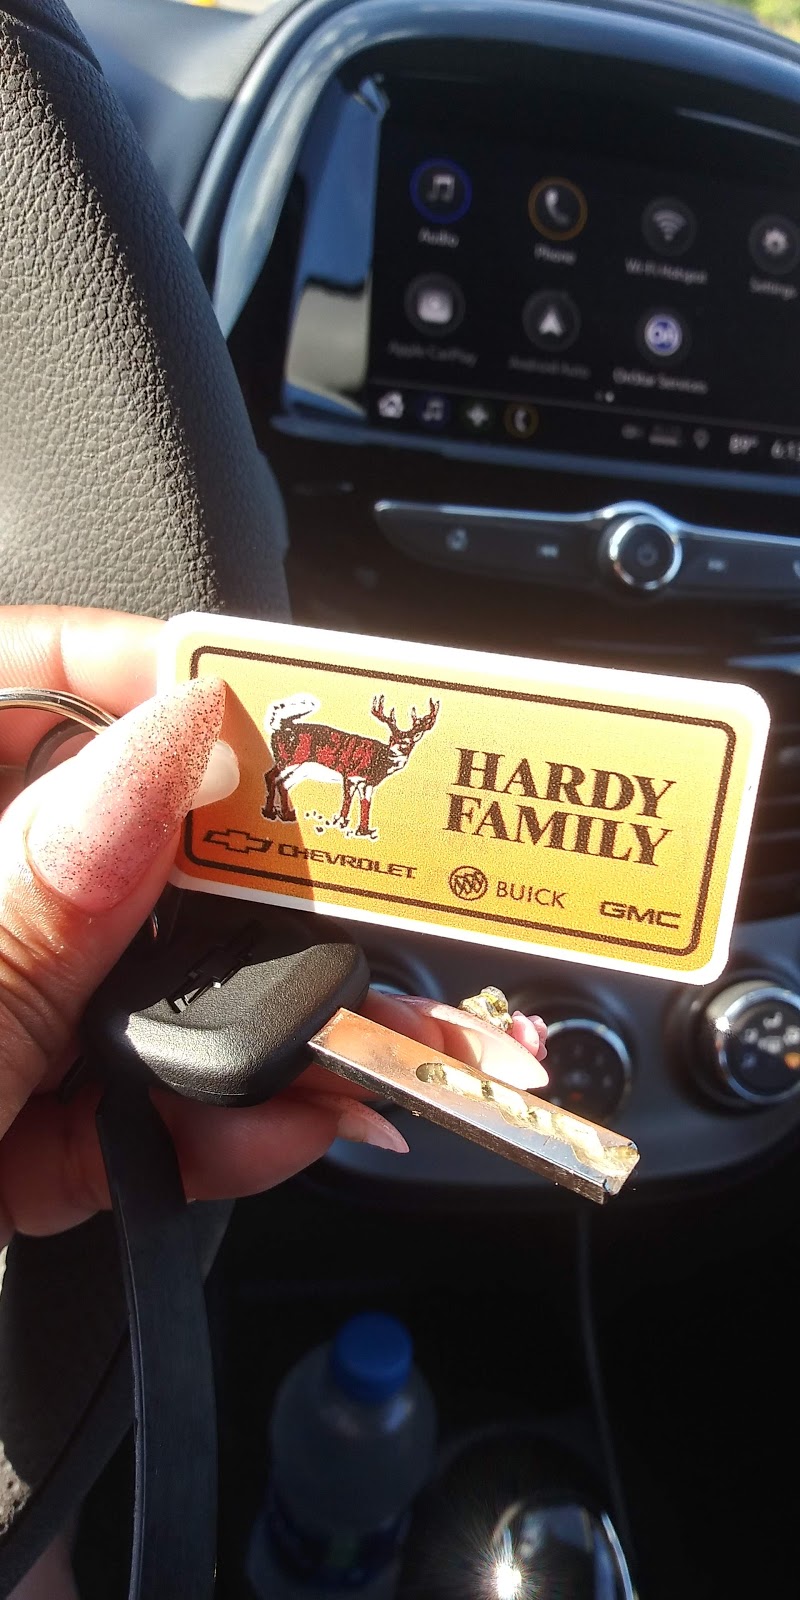 Hardy Chevrolet Buick GMC | 2026 Macland Rd, Dallas, GA 30157, USA | Phone: (470) 938-8624